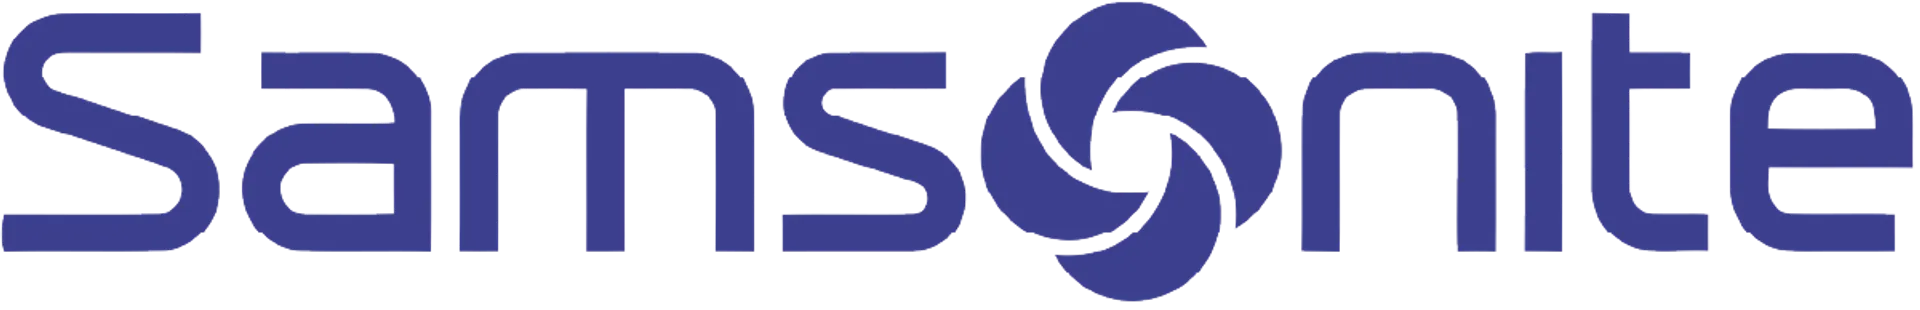 SAMSONITE logo die aktuell Flugblatt